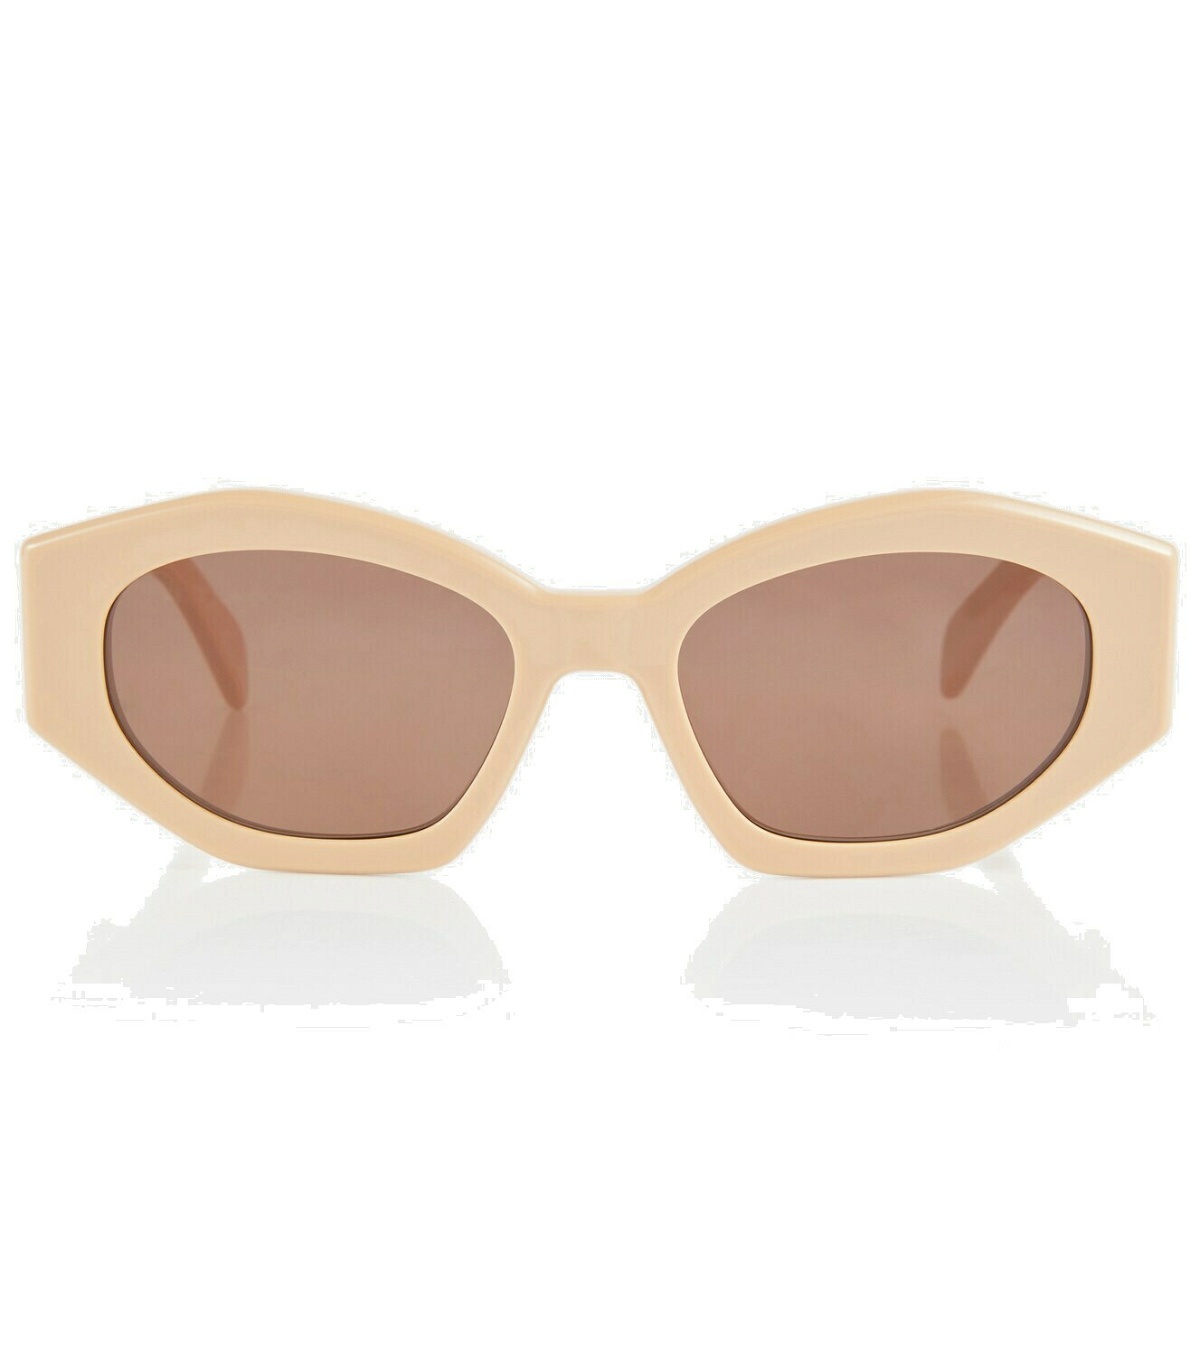 Celine Eyewear Triomphe 08 cat-eye sunglasses Celine